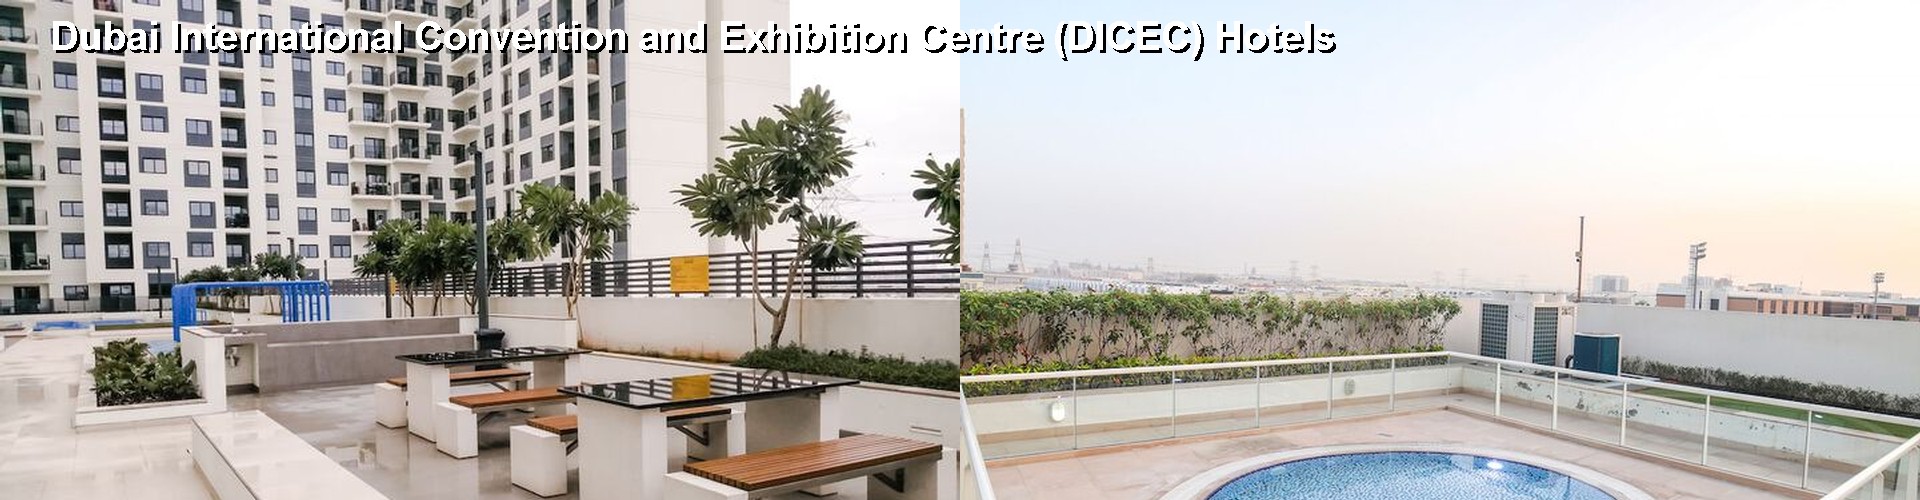 5 Best Hotels near Dubai International Convention and Exhibition Centre (DICEC)